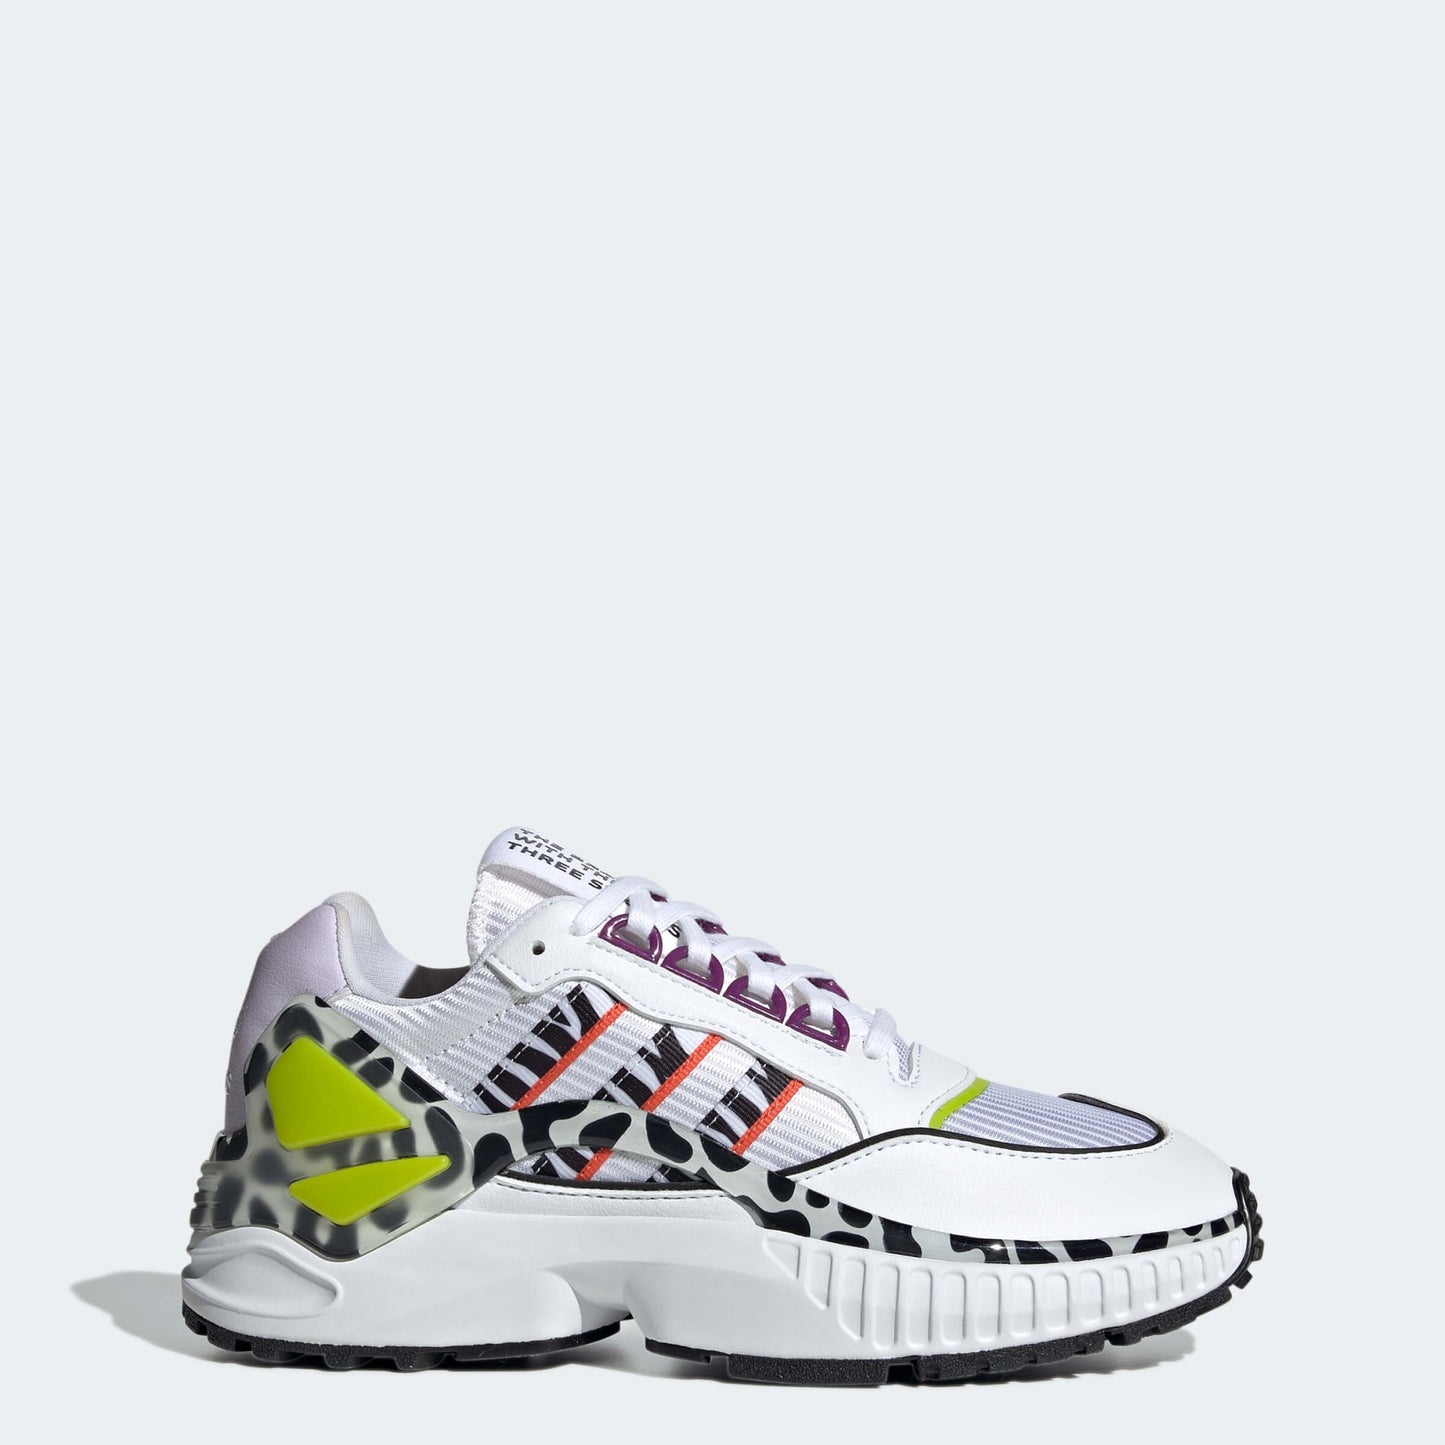 Adidas Originals Rich Mnisi ZX Wavian Shoes ftwr white